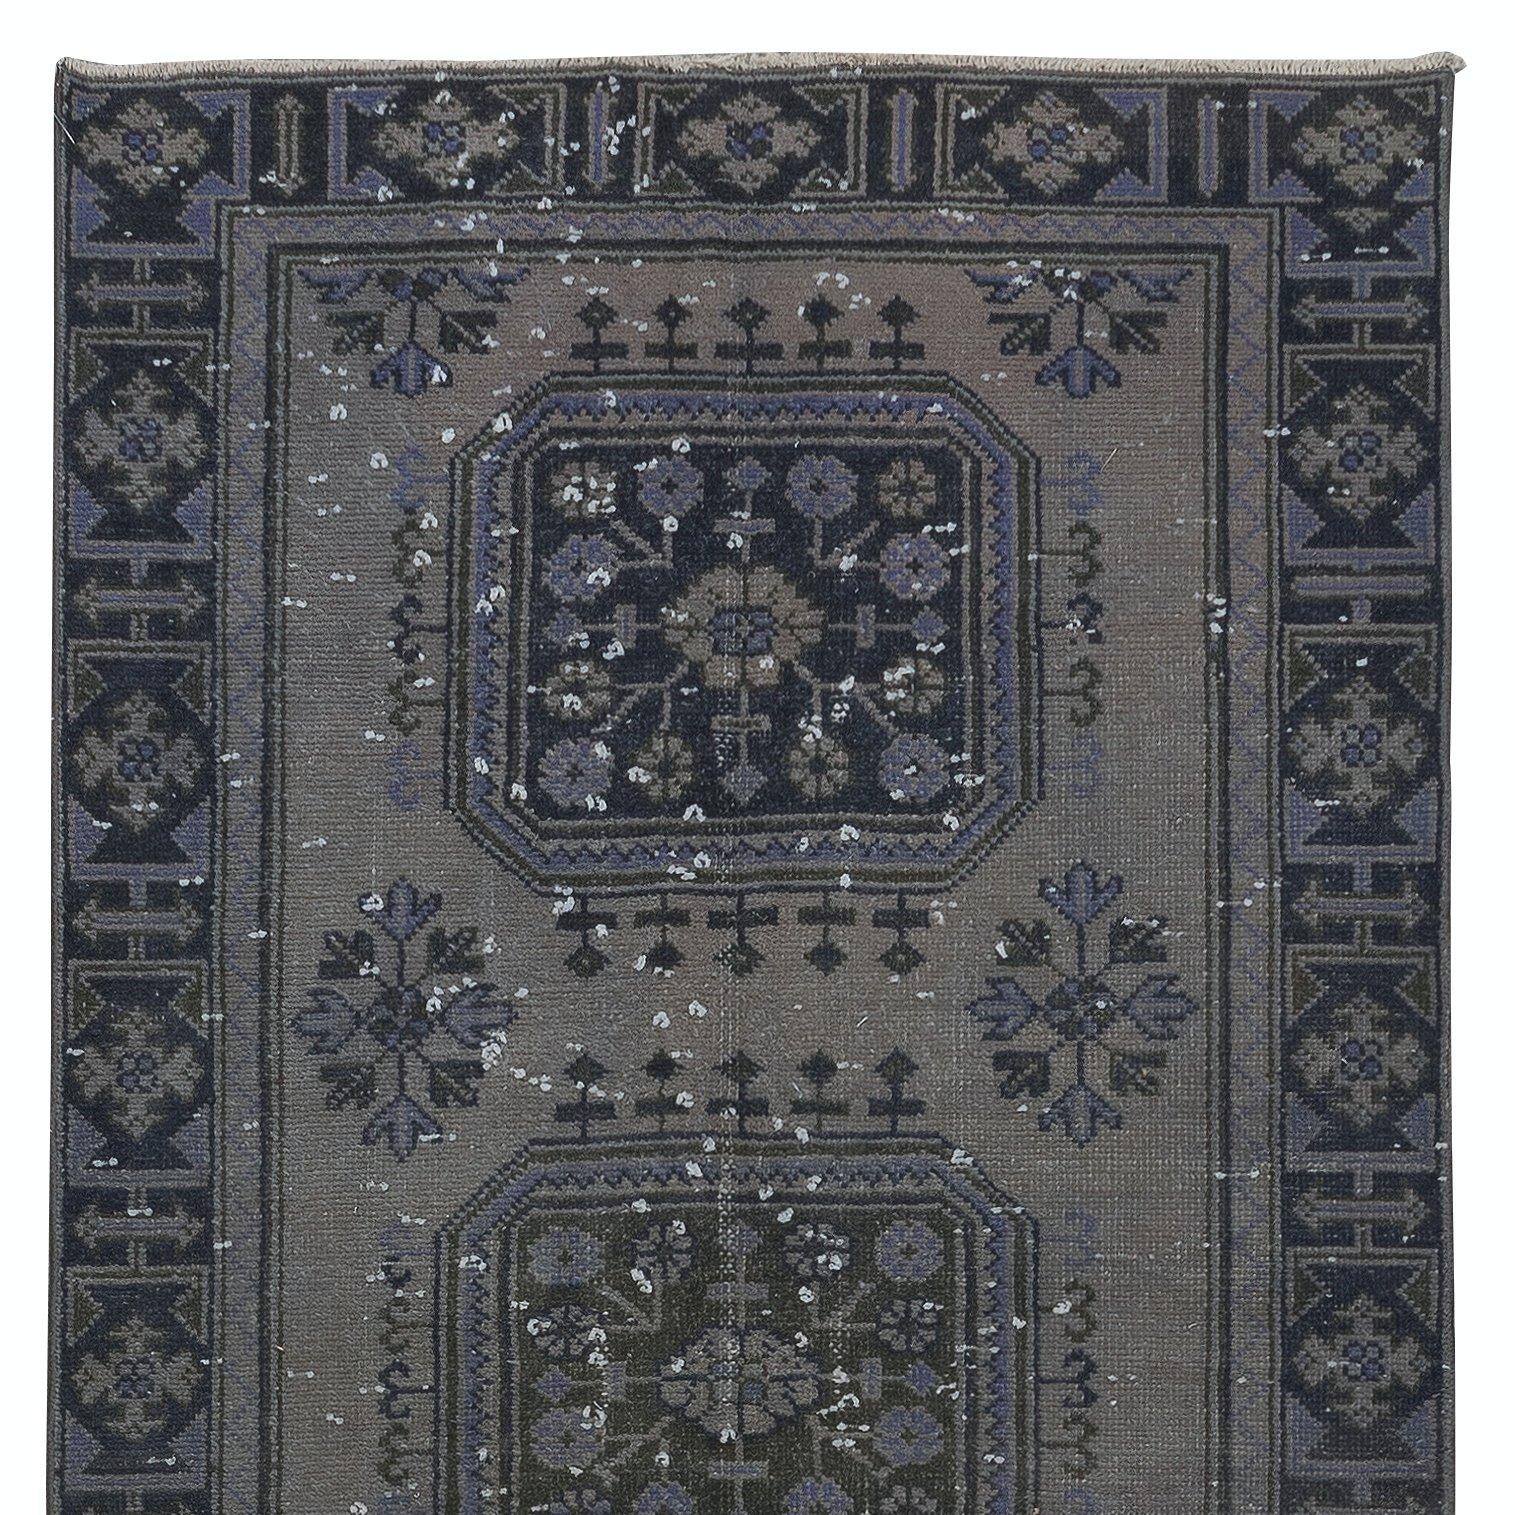 Modern 4.2x11.6 Ft Turkish Runner Rug, Handmade Corridor Carpet in Gray, Black & Purple